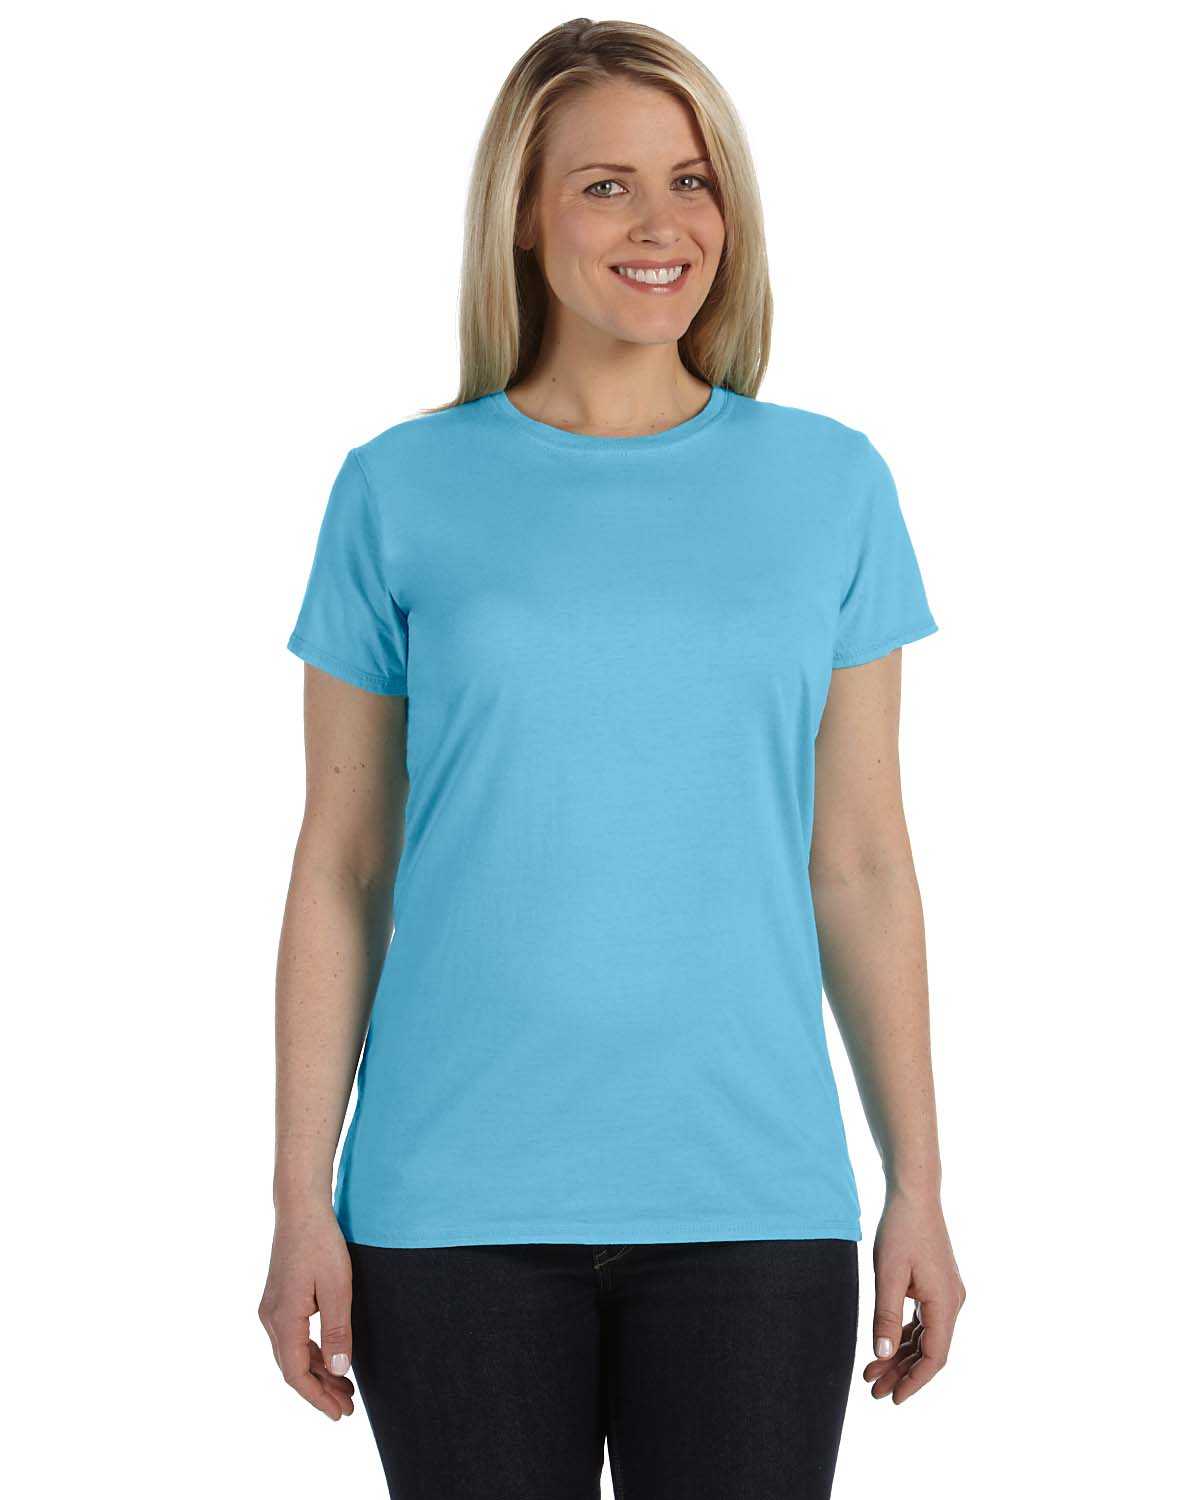 Comfort Colors C4200 Ladies' 4.8 oz. Fitted T-Shirt | ApparelChoice.com